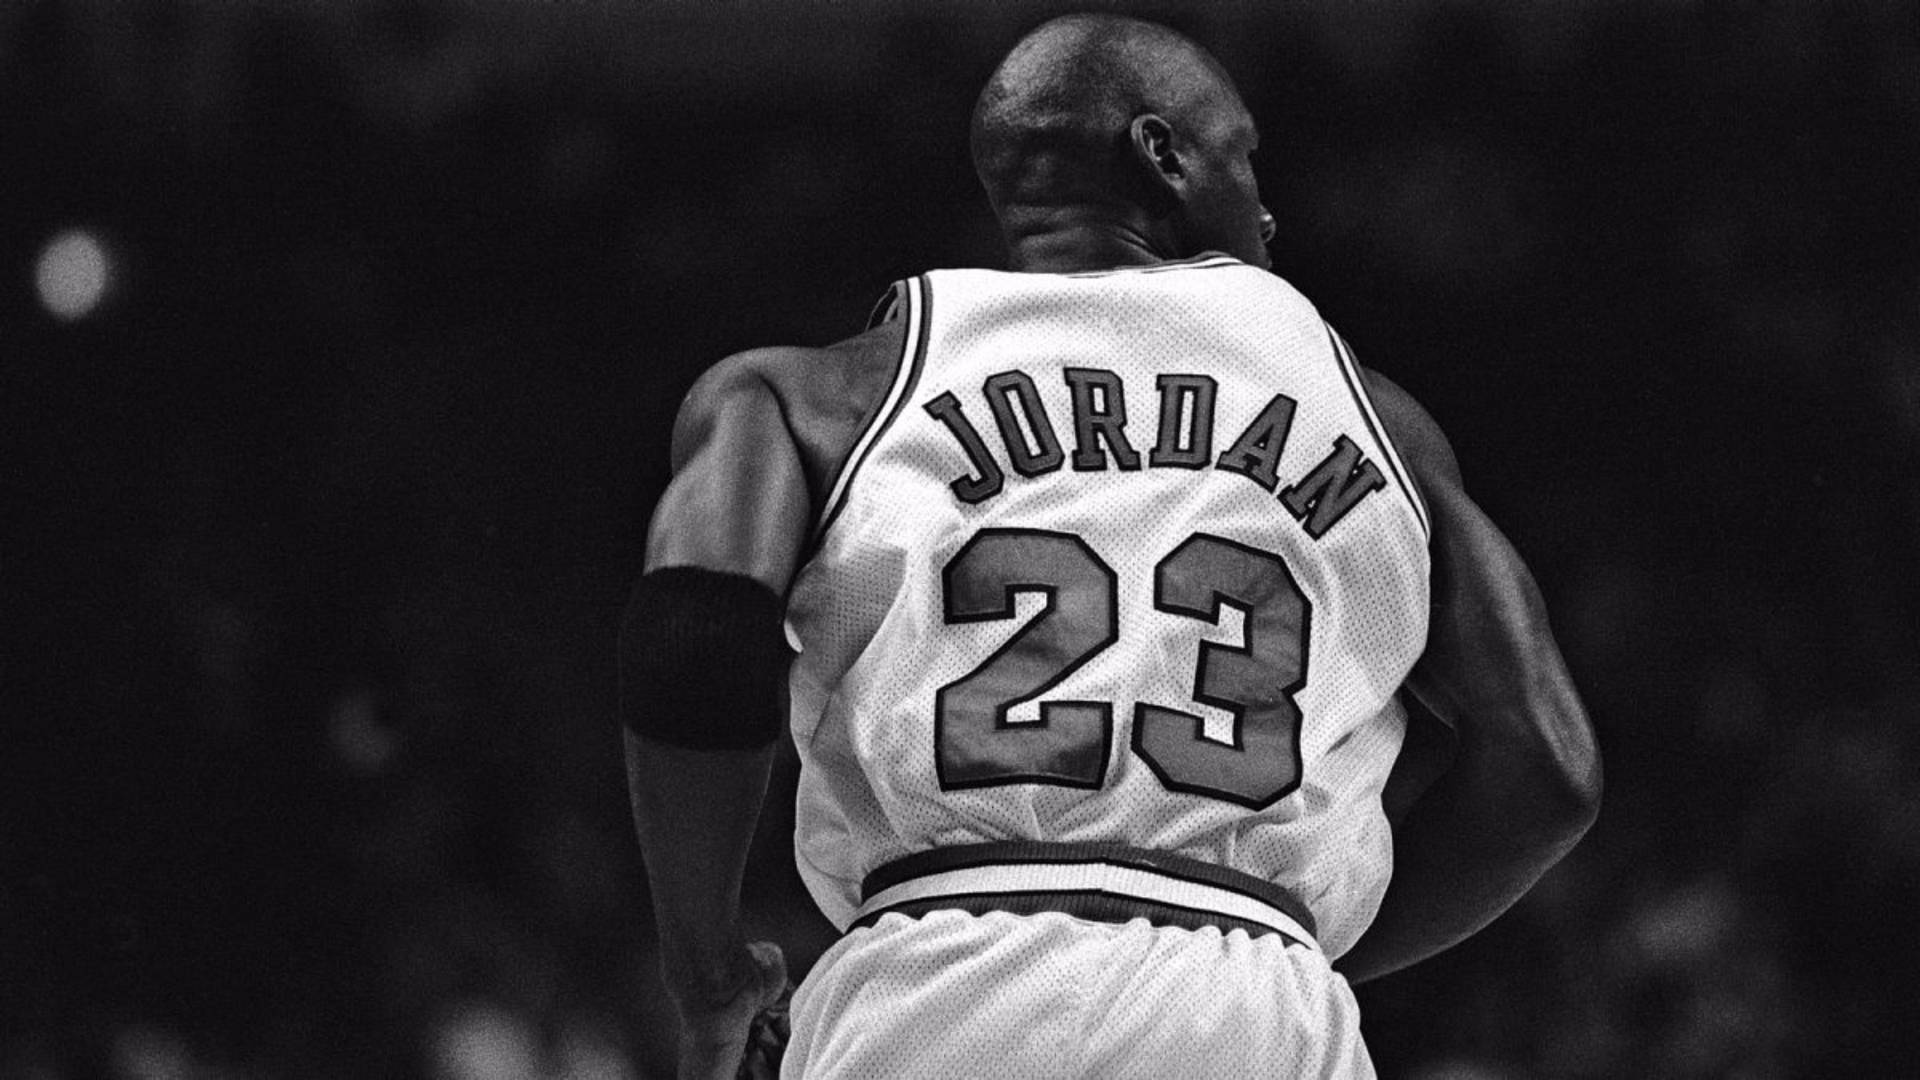 Behind Michael Jordan White Jersey Picture